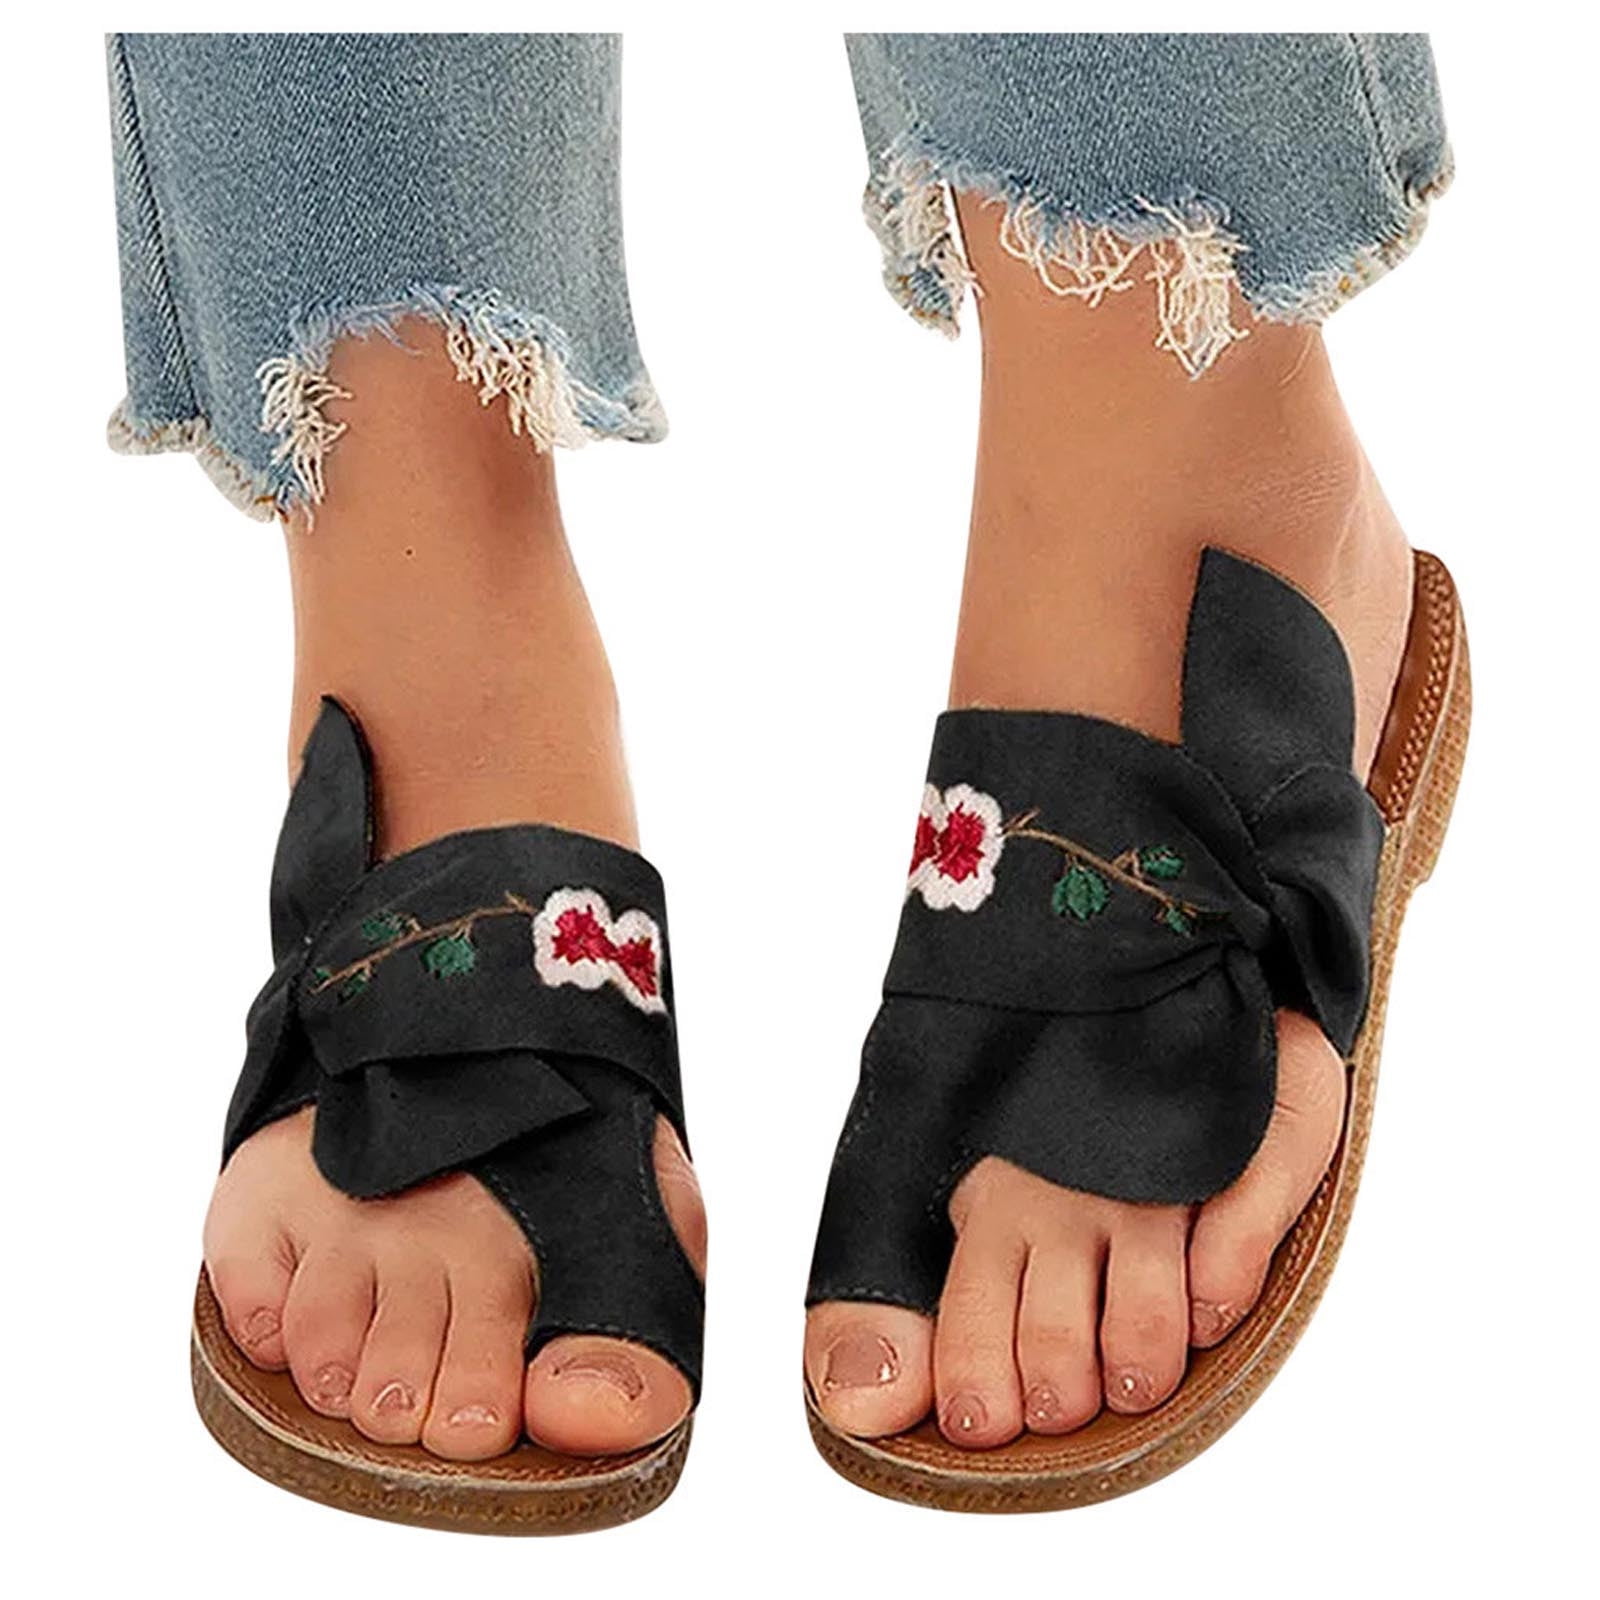 Womens Orthopedic Sliders Sandals Flip Flops Open Toe Flat Summer Beach Shoes